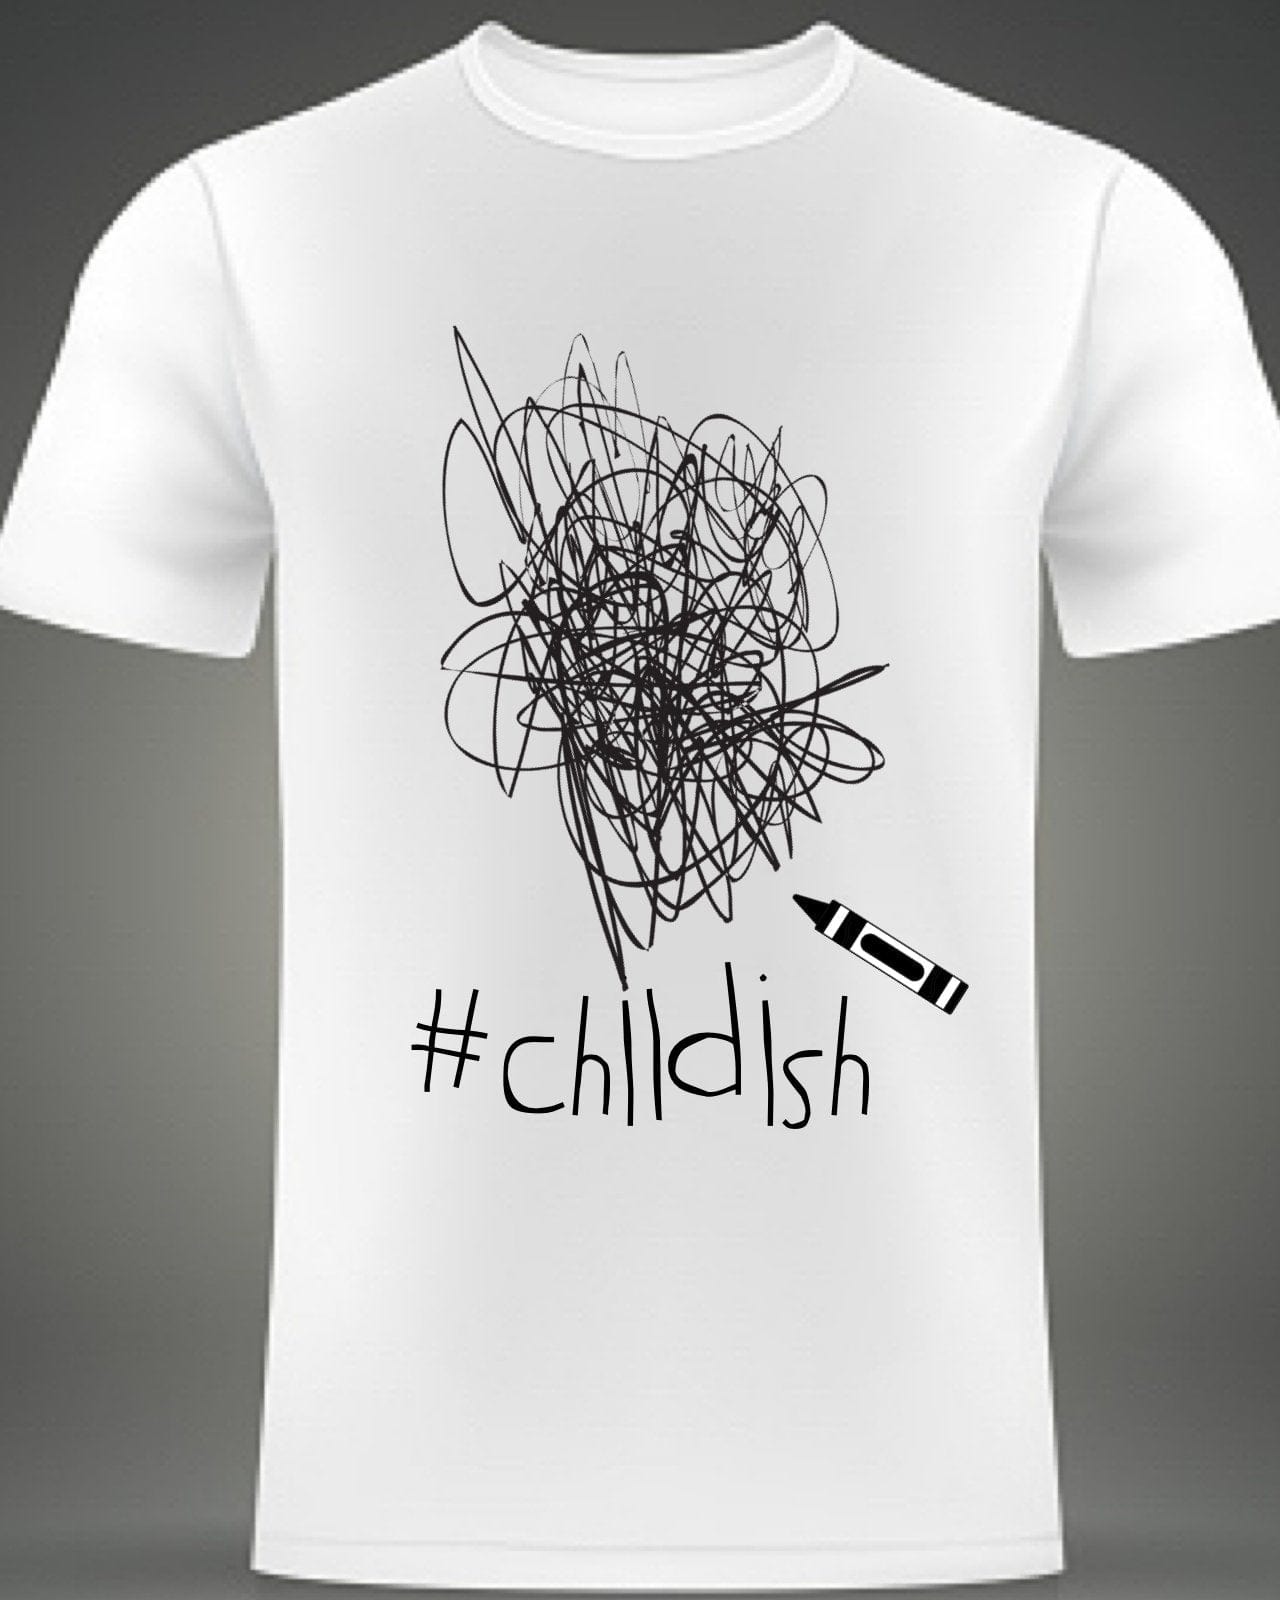 InsensitiviTees Shirts S / White #childish T-shirt